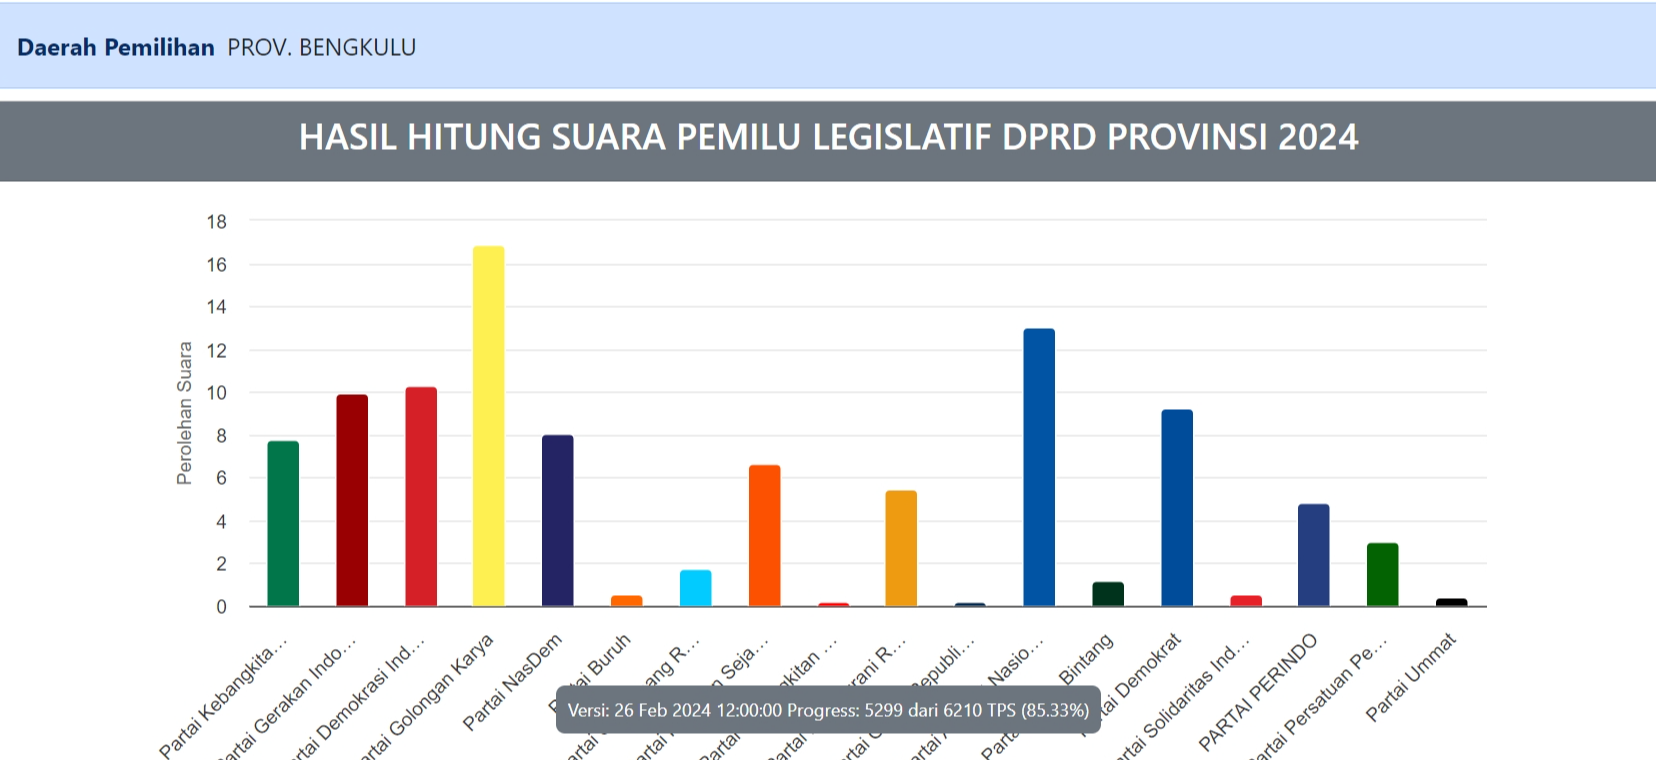 Prediksi 45 Anggota DPRD Provinsi Bengkulu 2024-2029 Terbaru, Kuasai 3 Dapil Golkar Rebut 10 Kursi 